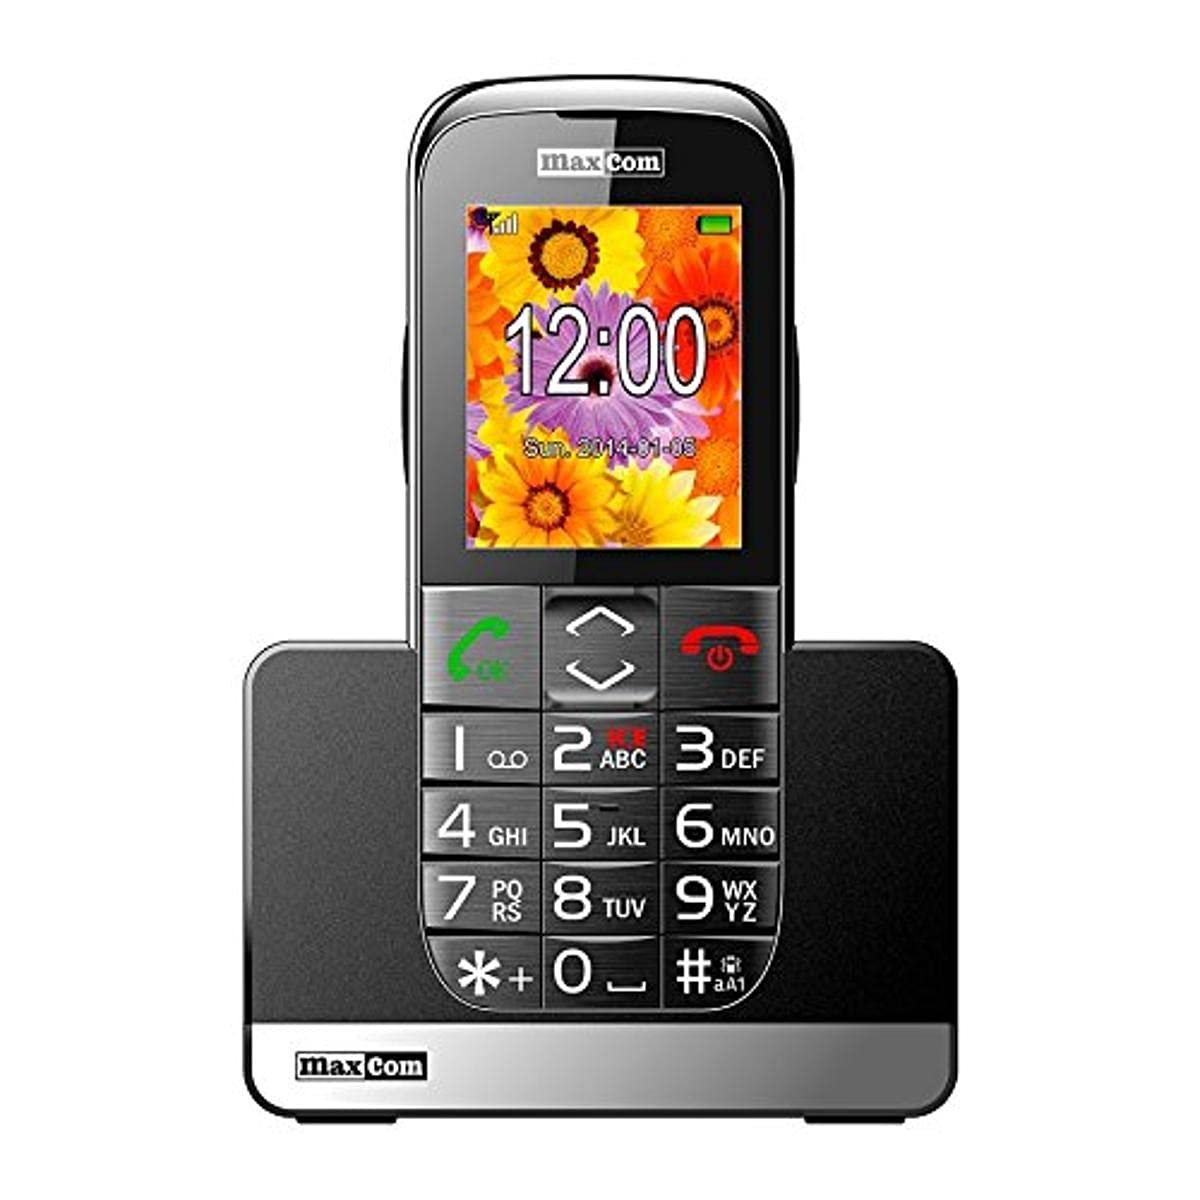 MAXCOM MOBILE PHONE MM 720